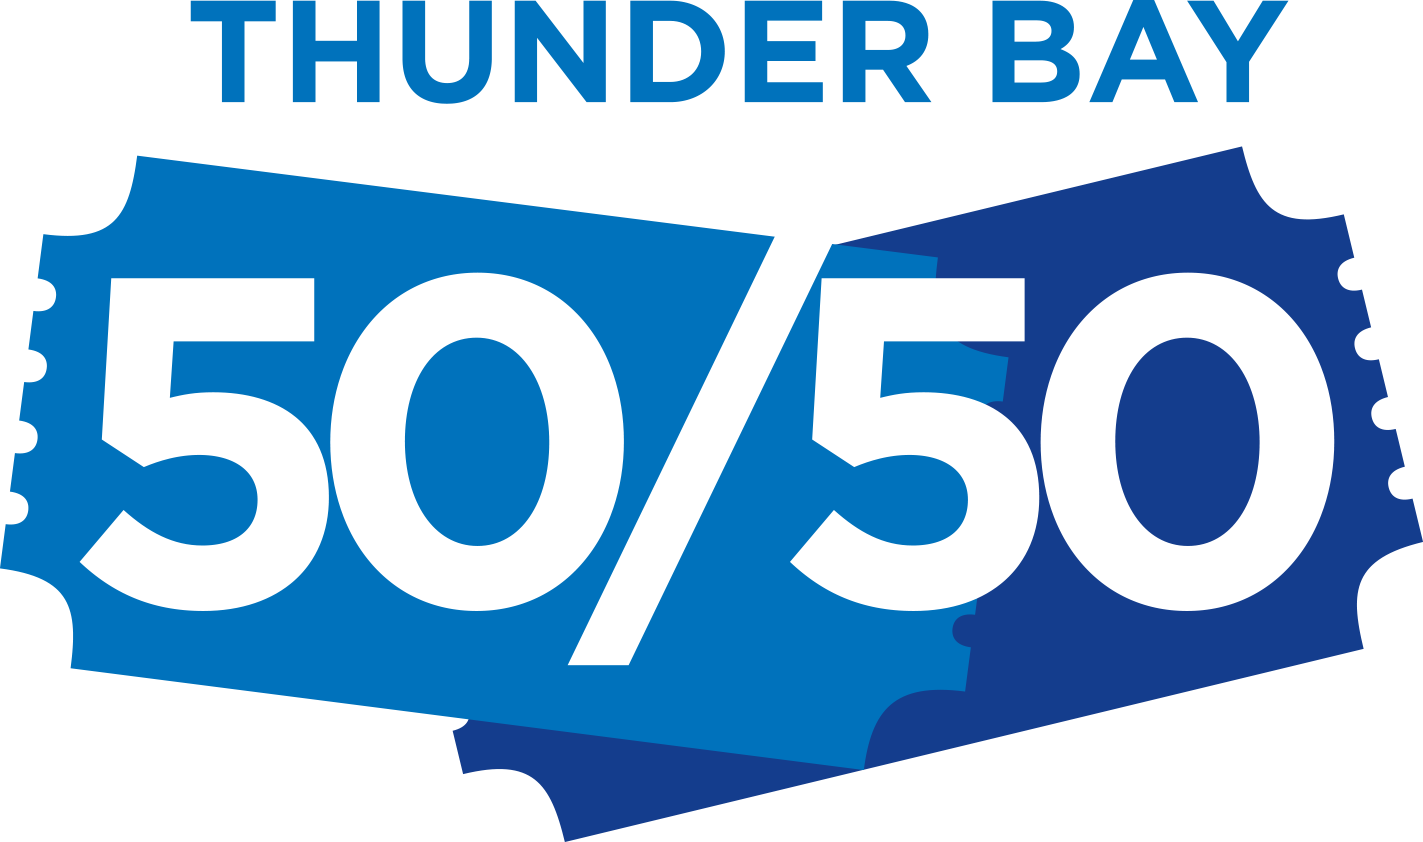 Thunder Bay 50/50: Early Bird Draw of $1,000 this Friday